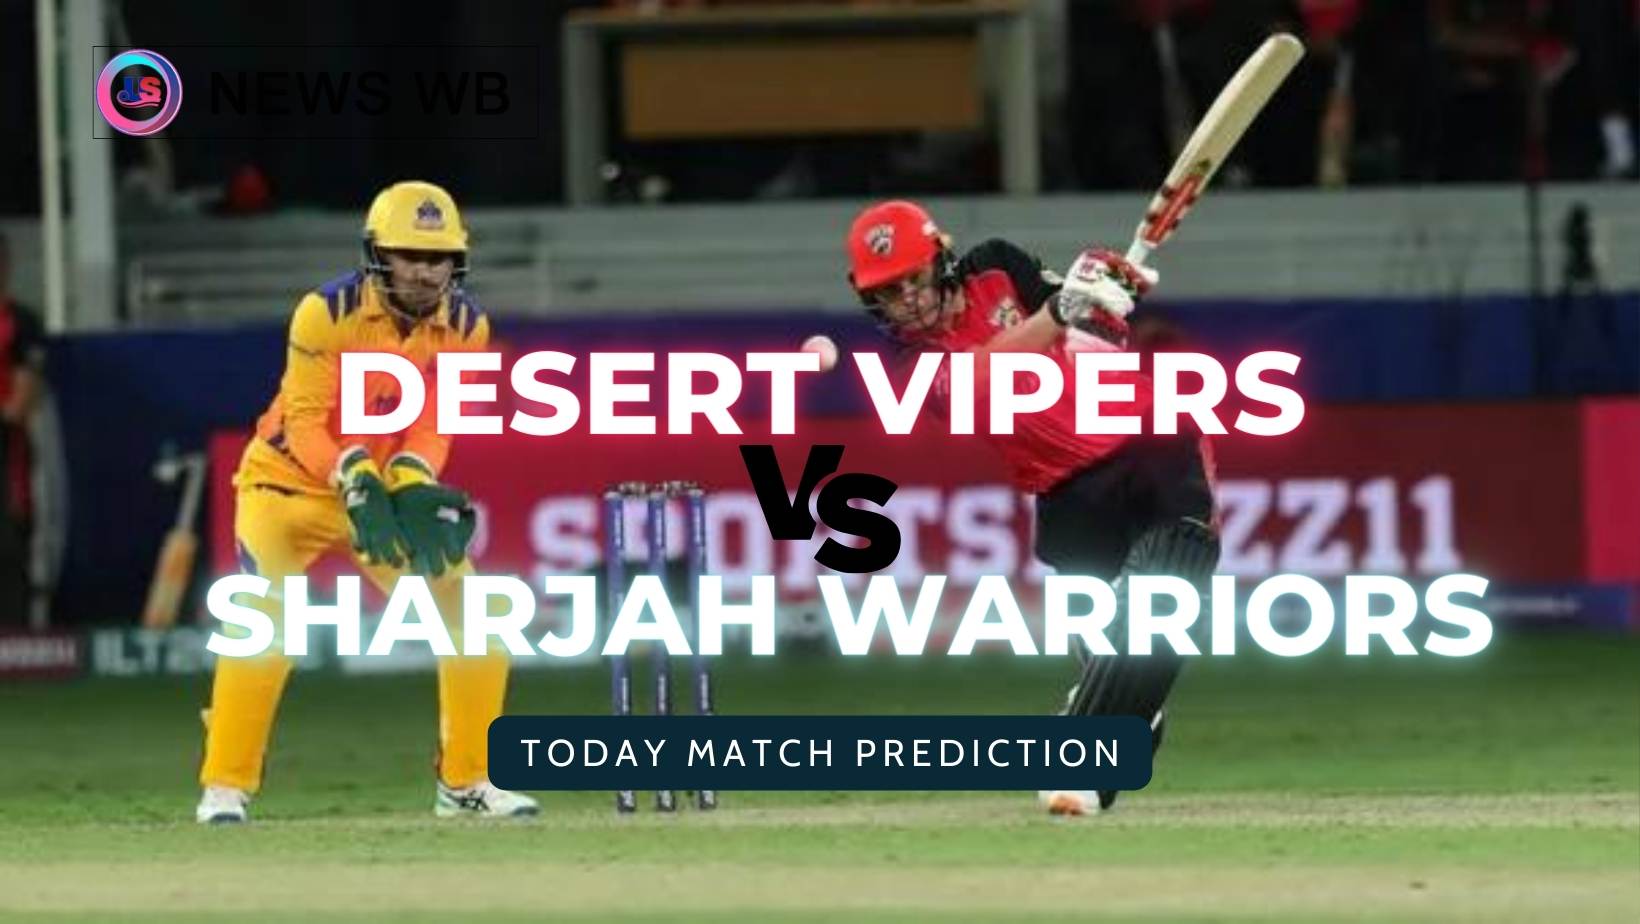 Today Match Prediction: DV vs SW Dream11 Team, Desert Vipers vs Sharjah Warriors 13th Match, Who Will Win?